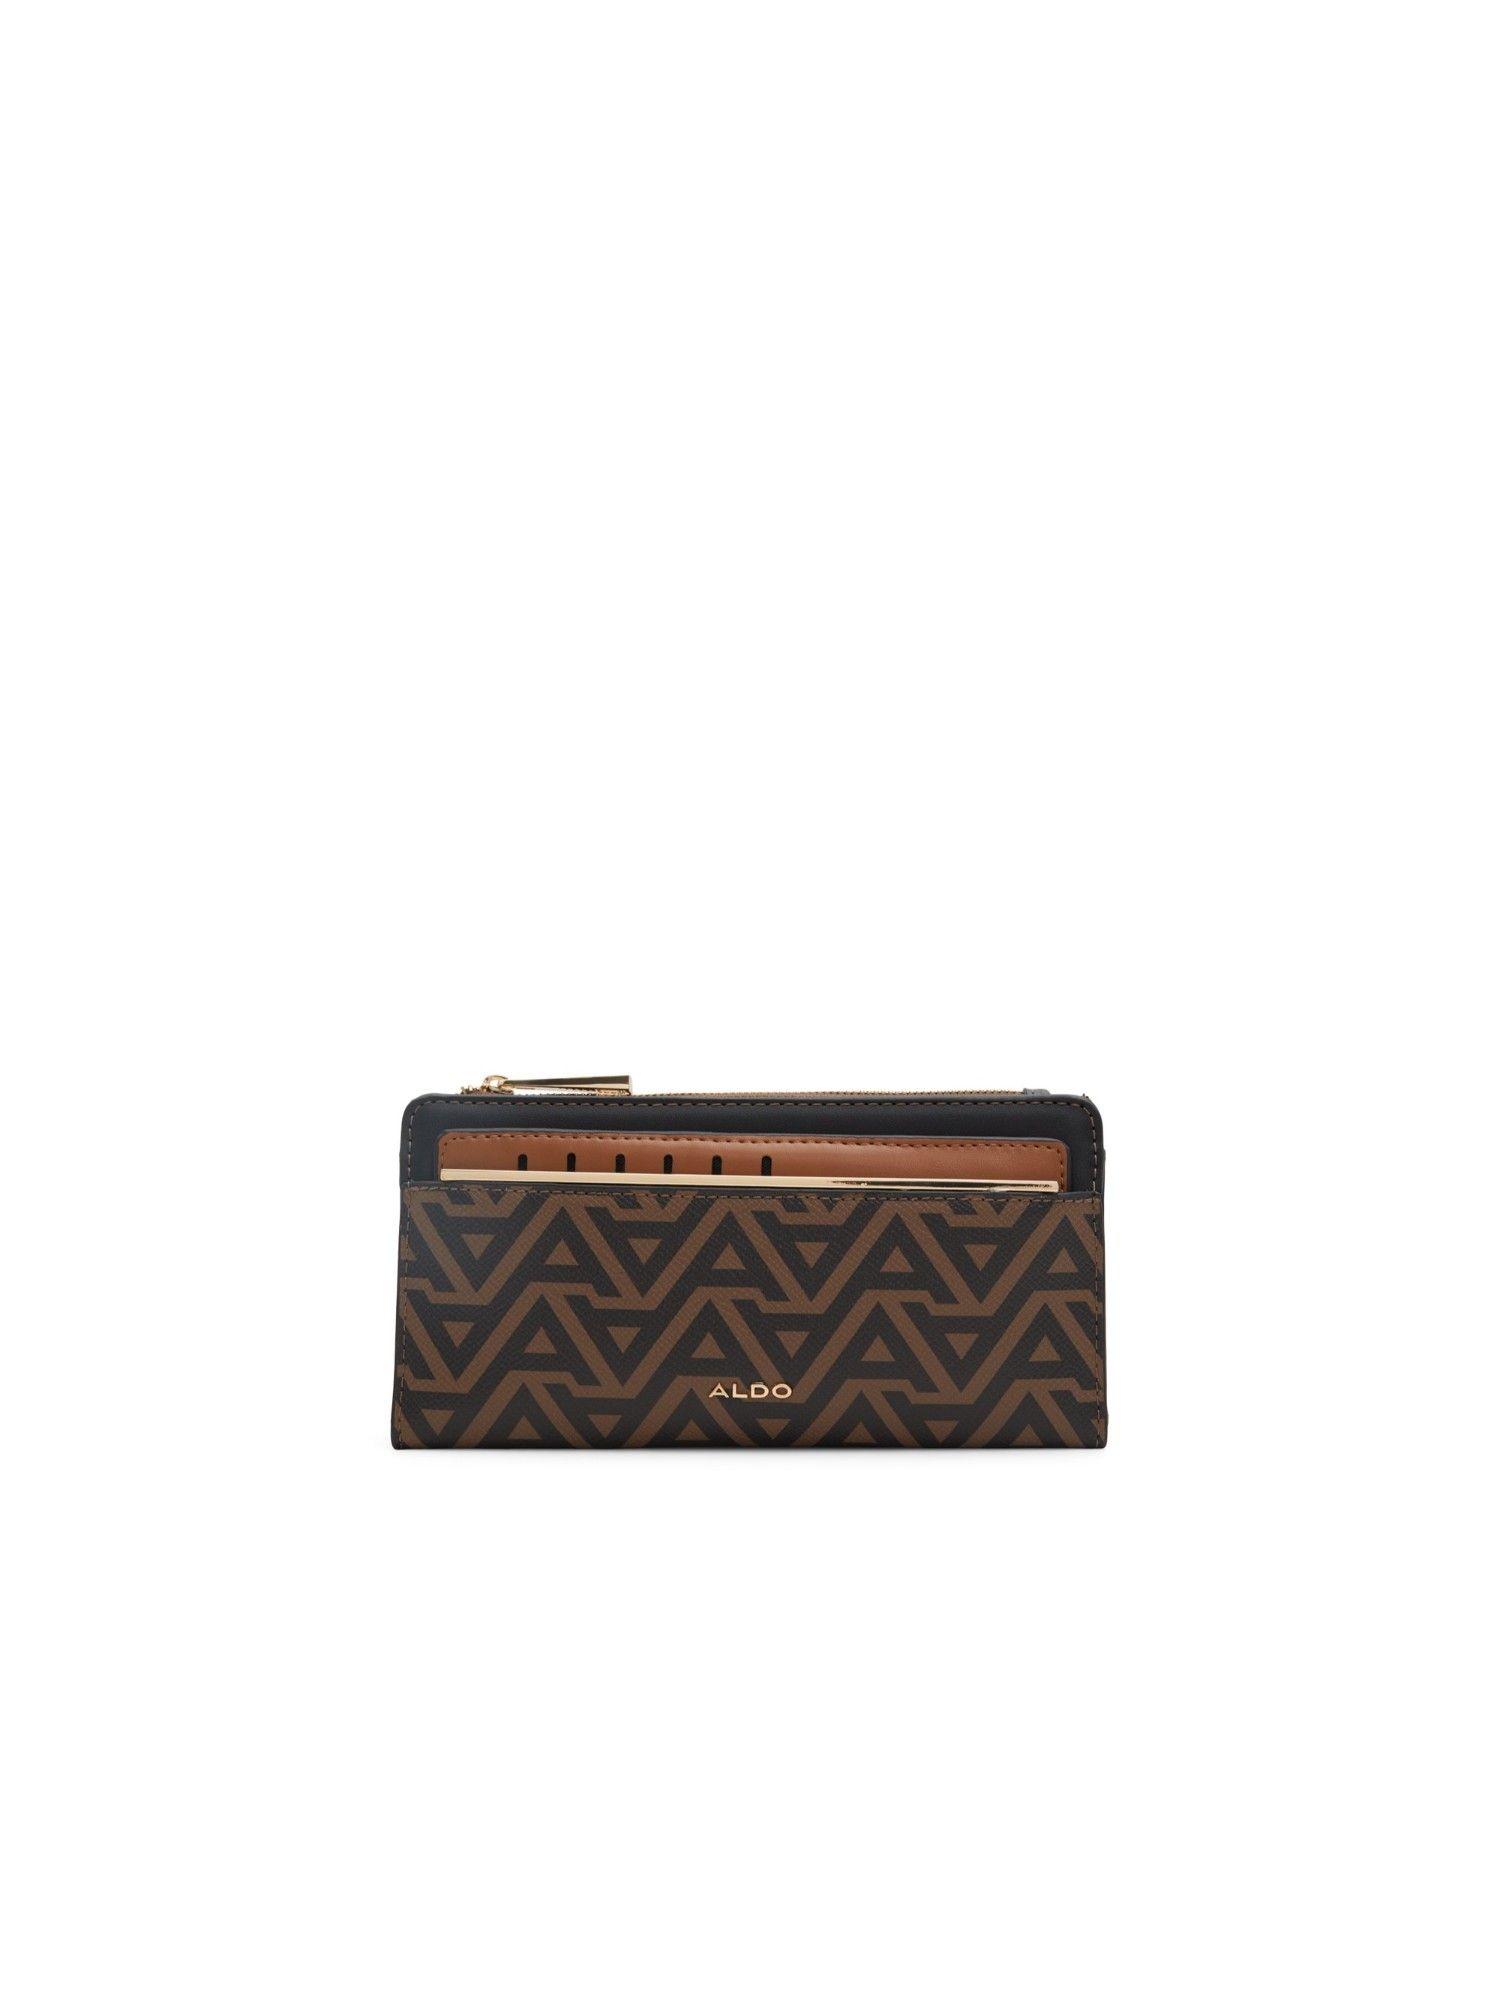 ocoissa women's brown wallet with card holder